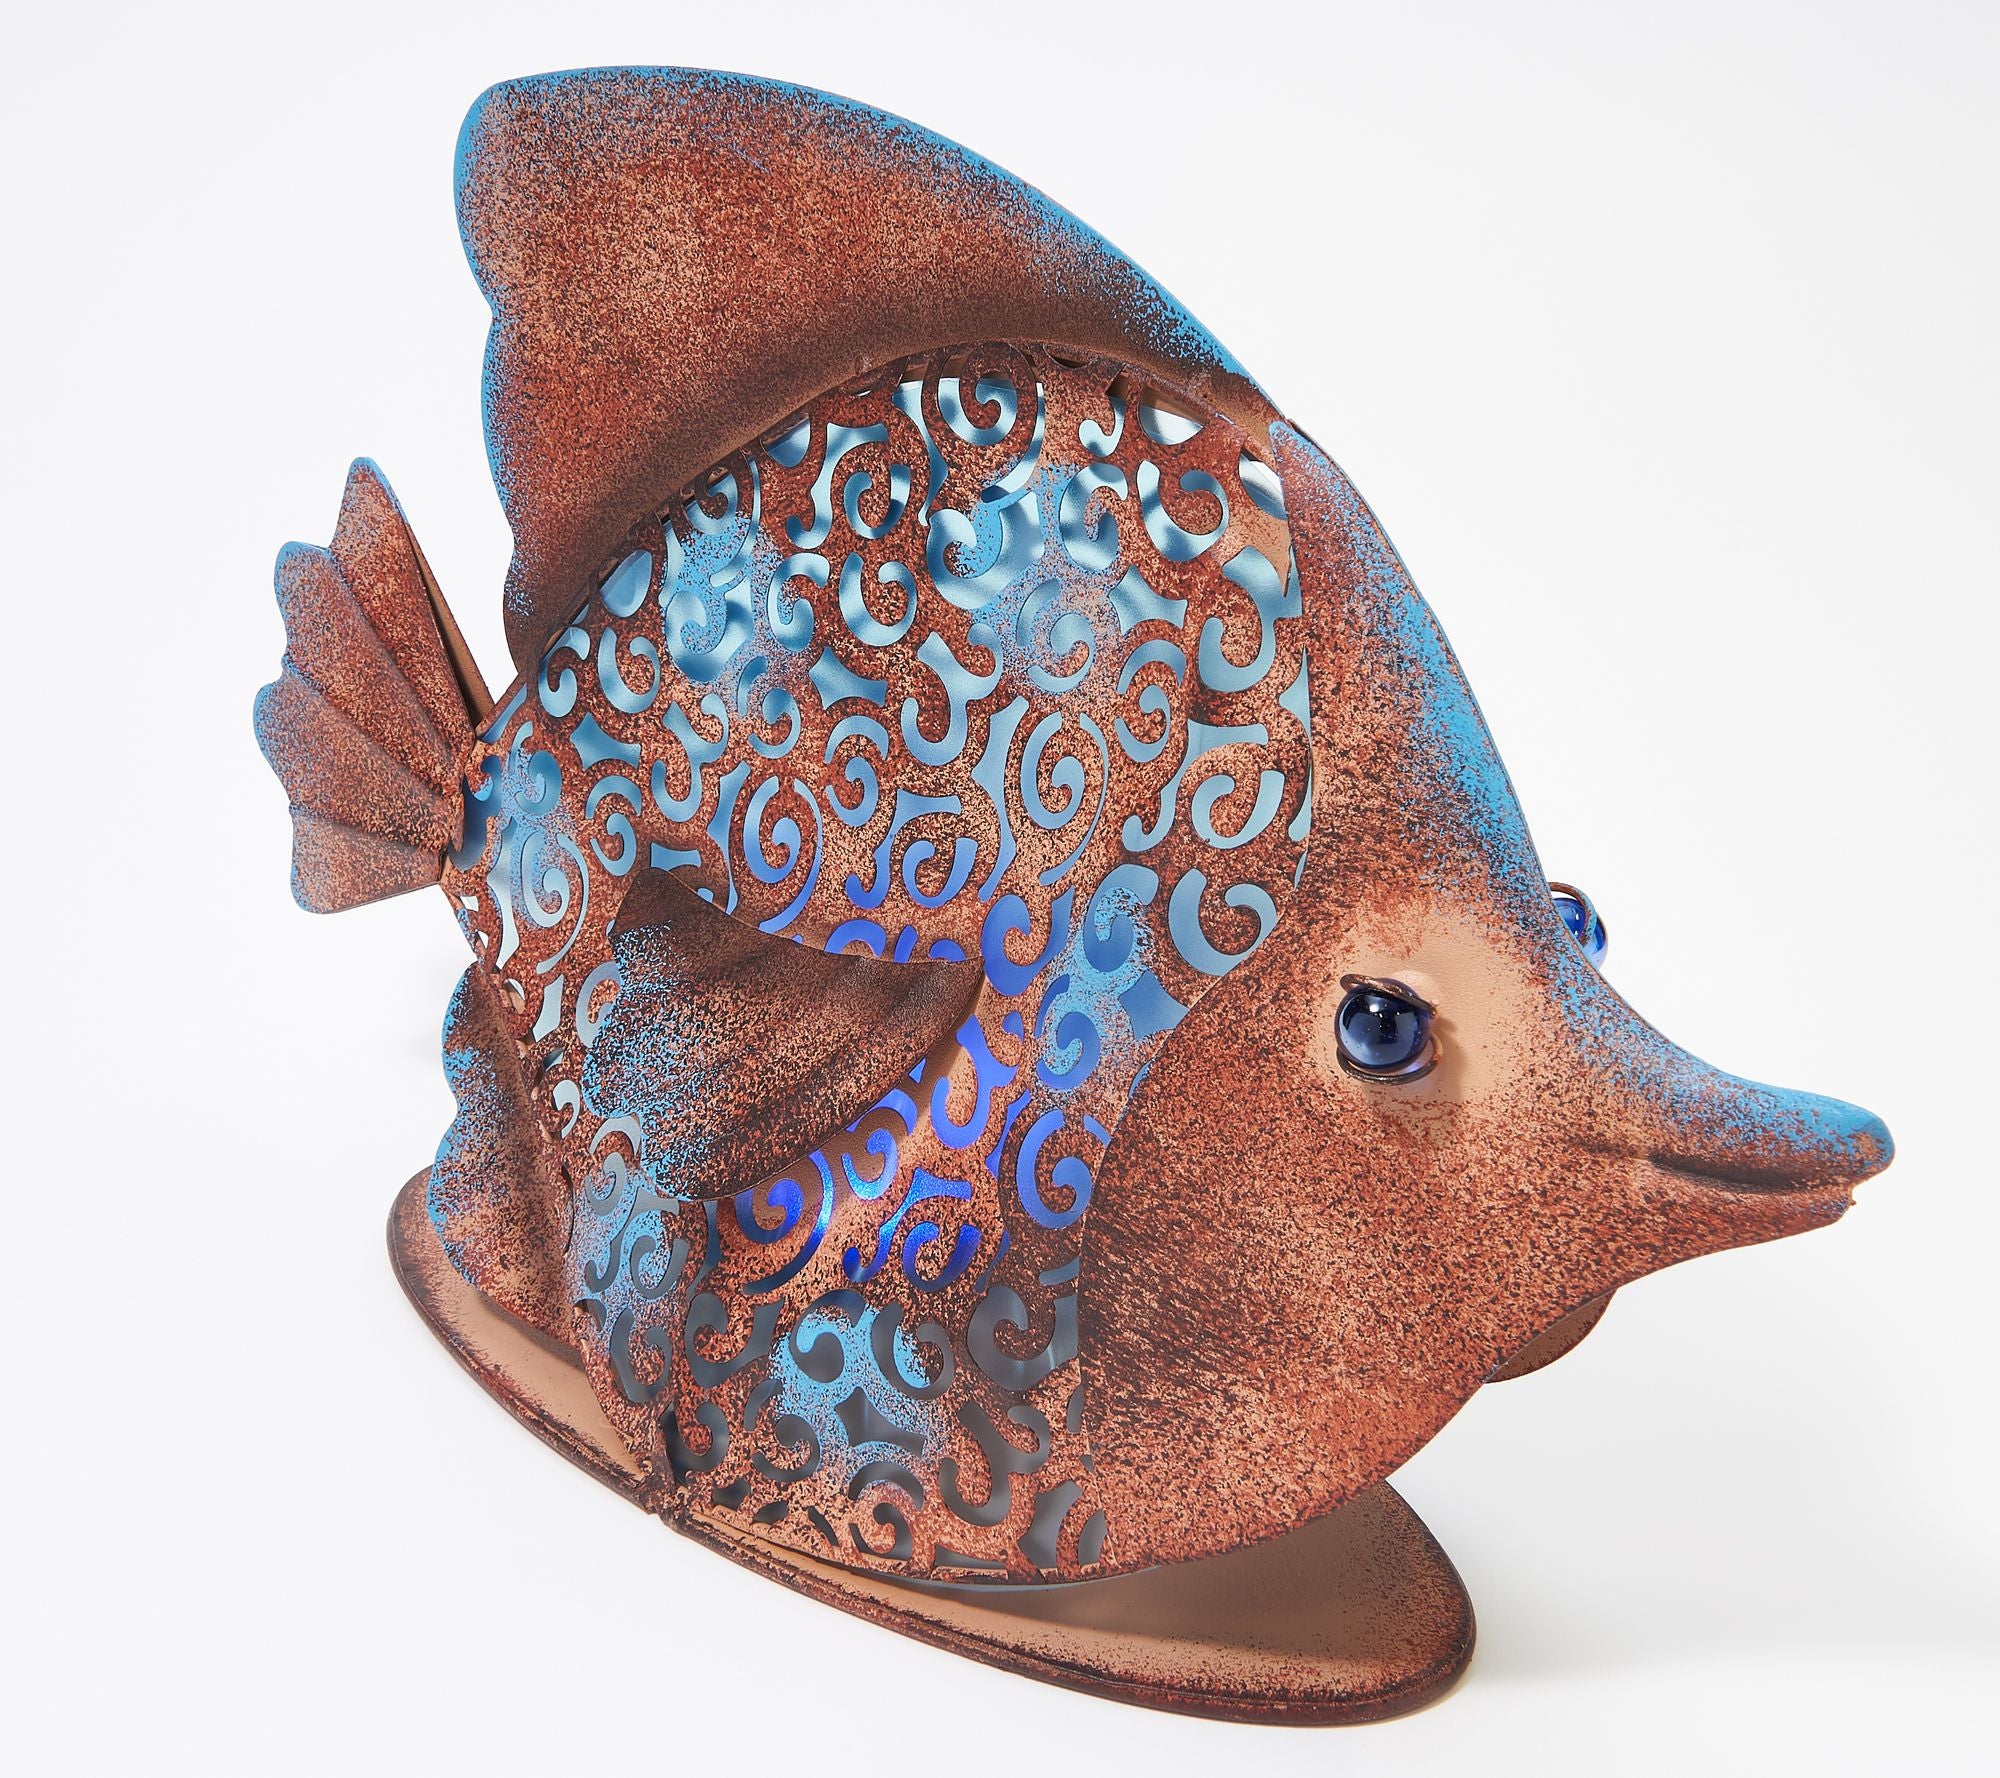 Copper Solar Fish Light - Rustic Garden Decor from Ultimate Innovations